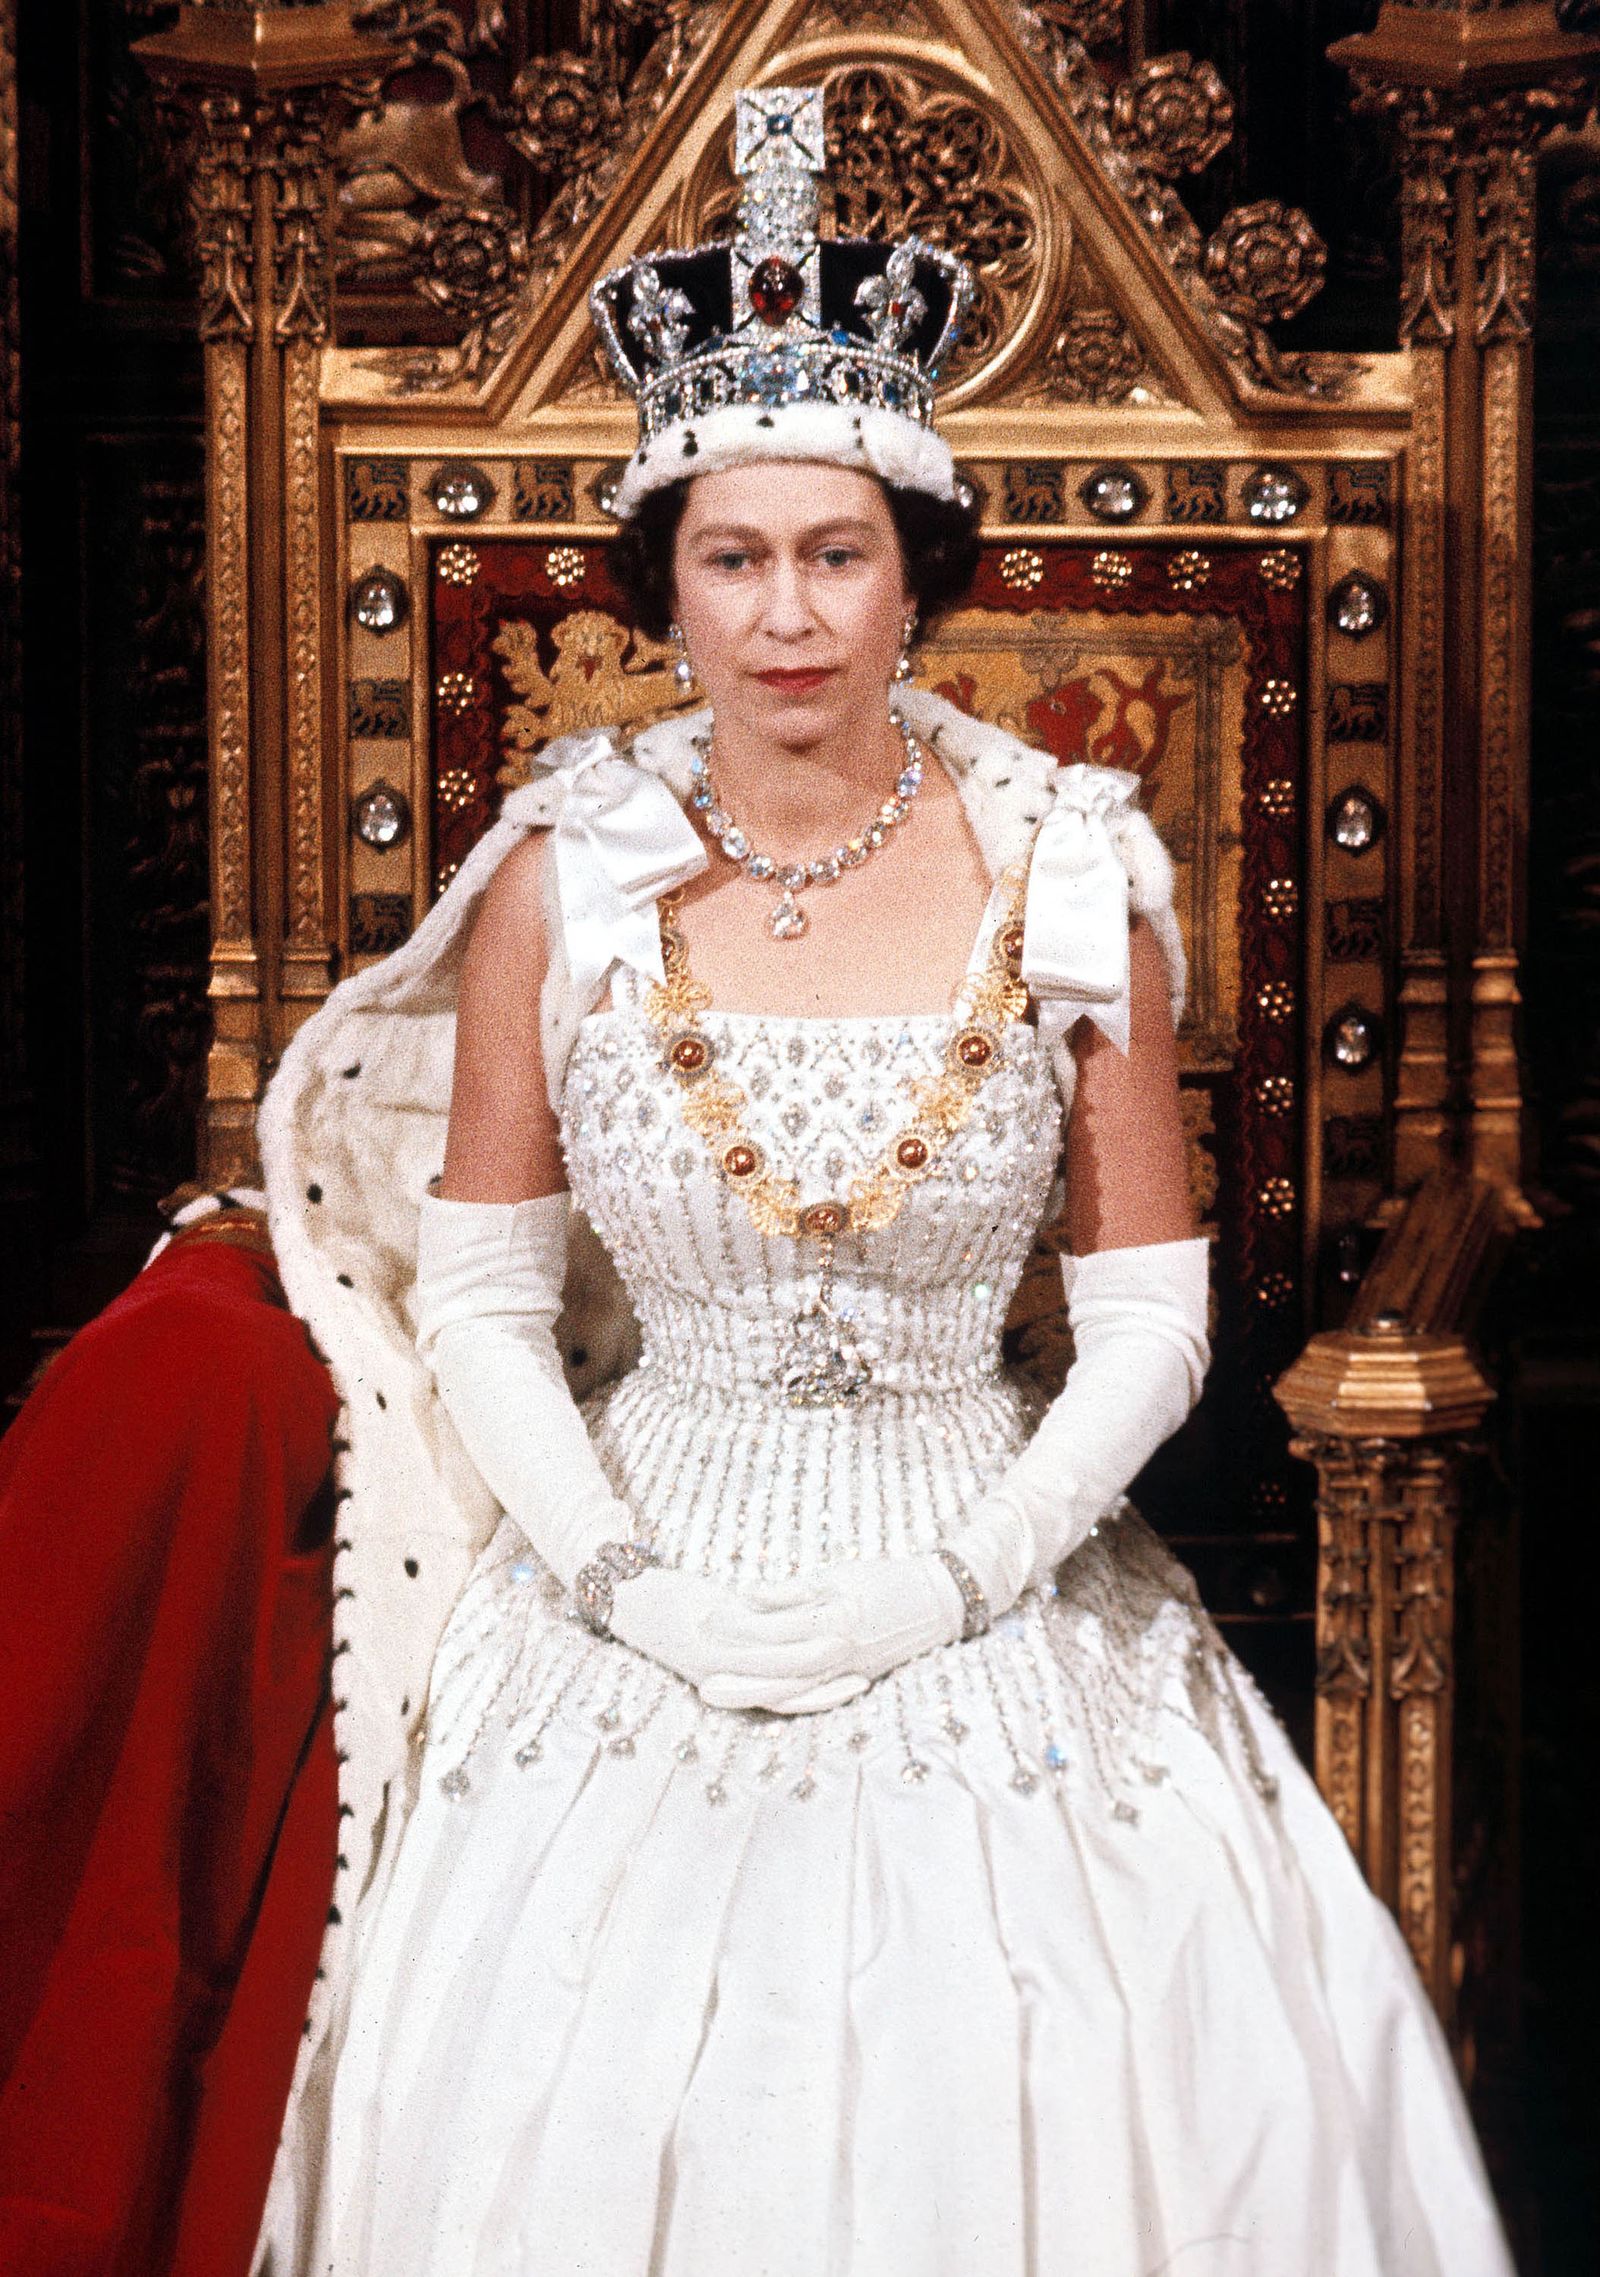 Facts about Queen Elizabeth II